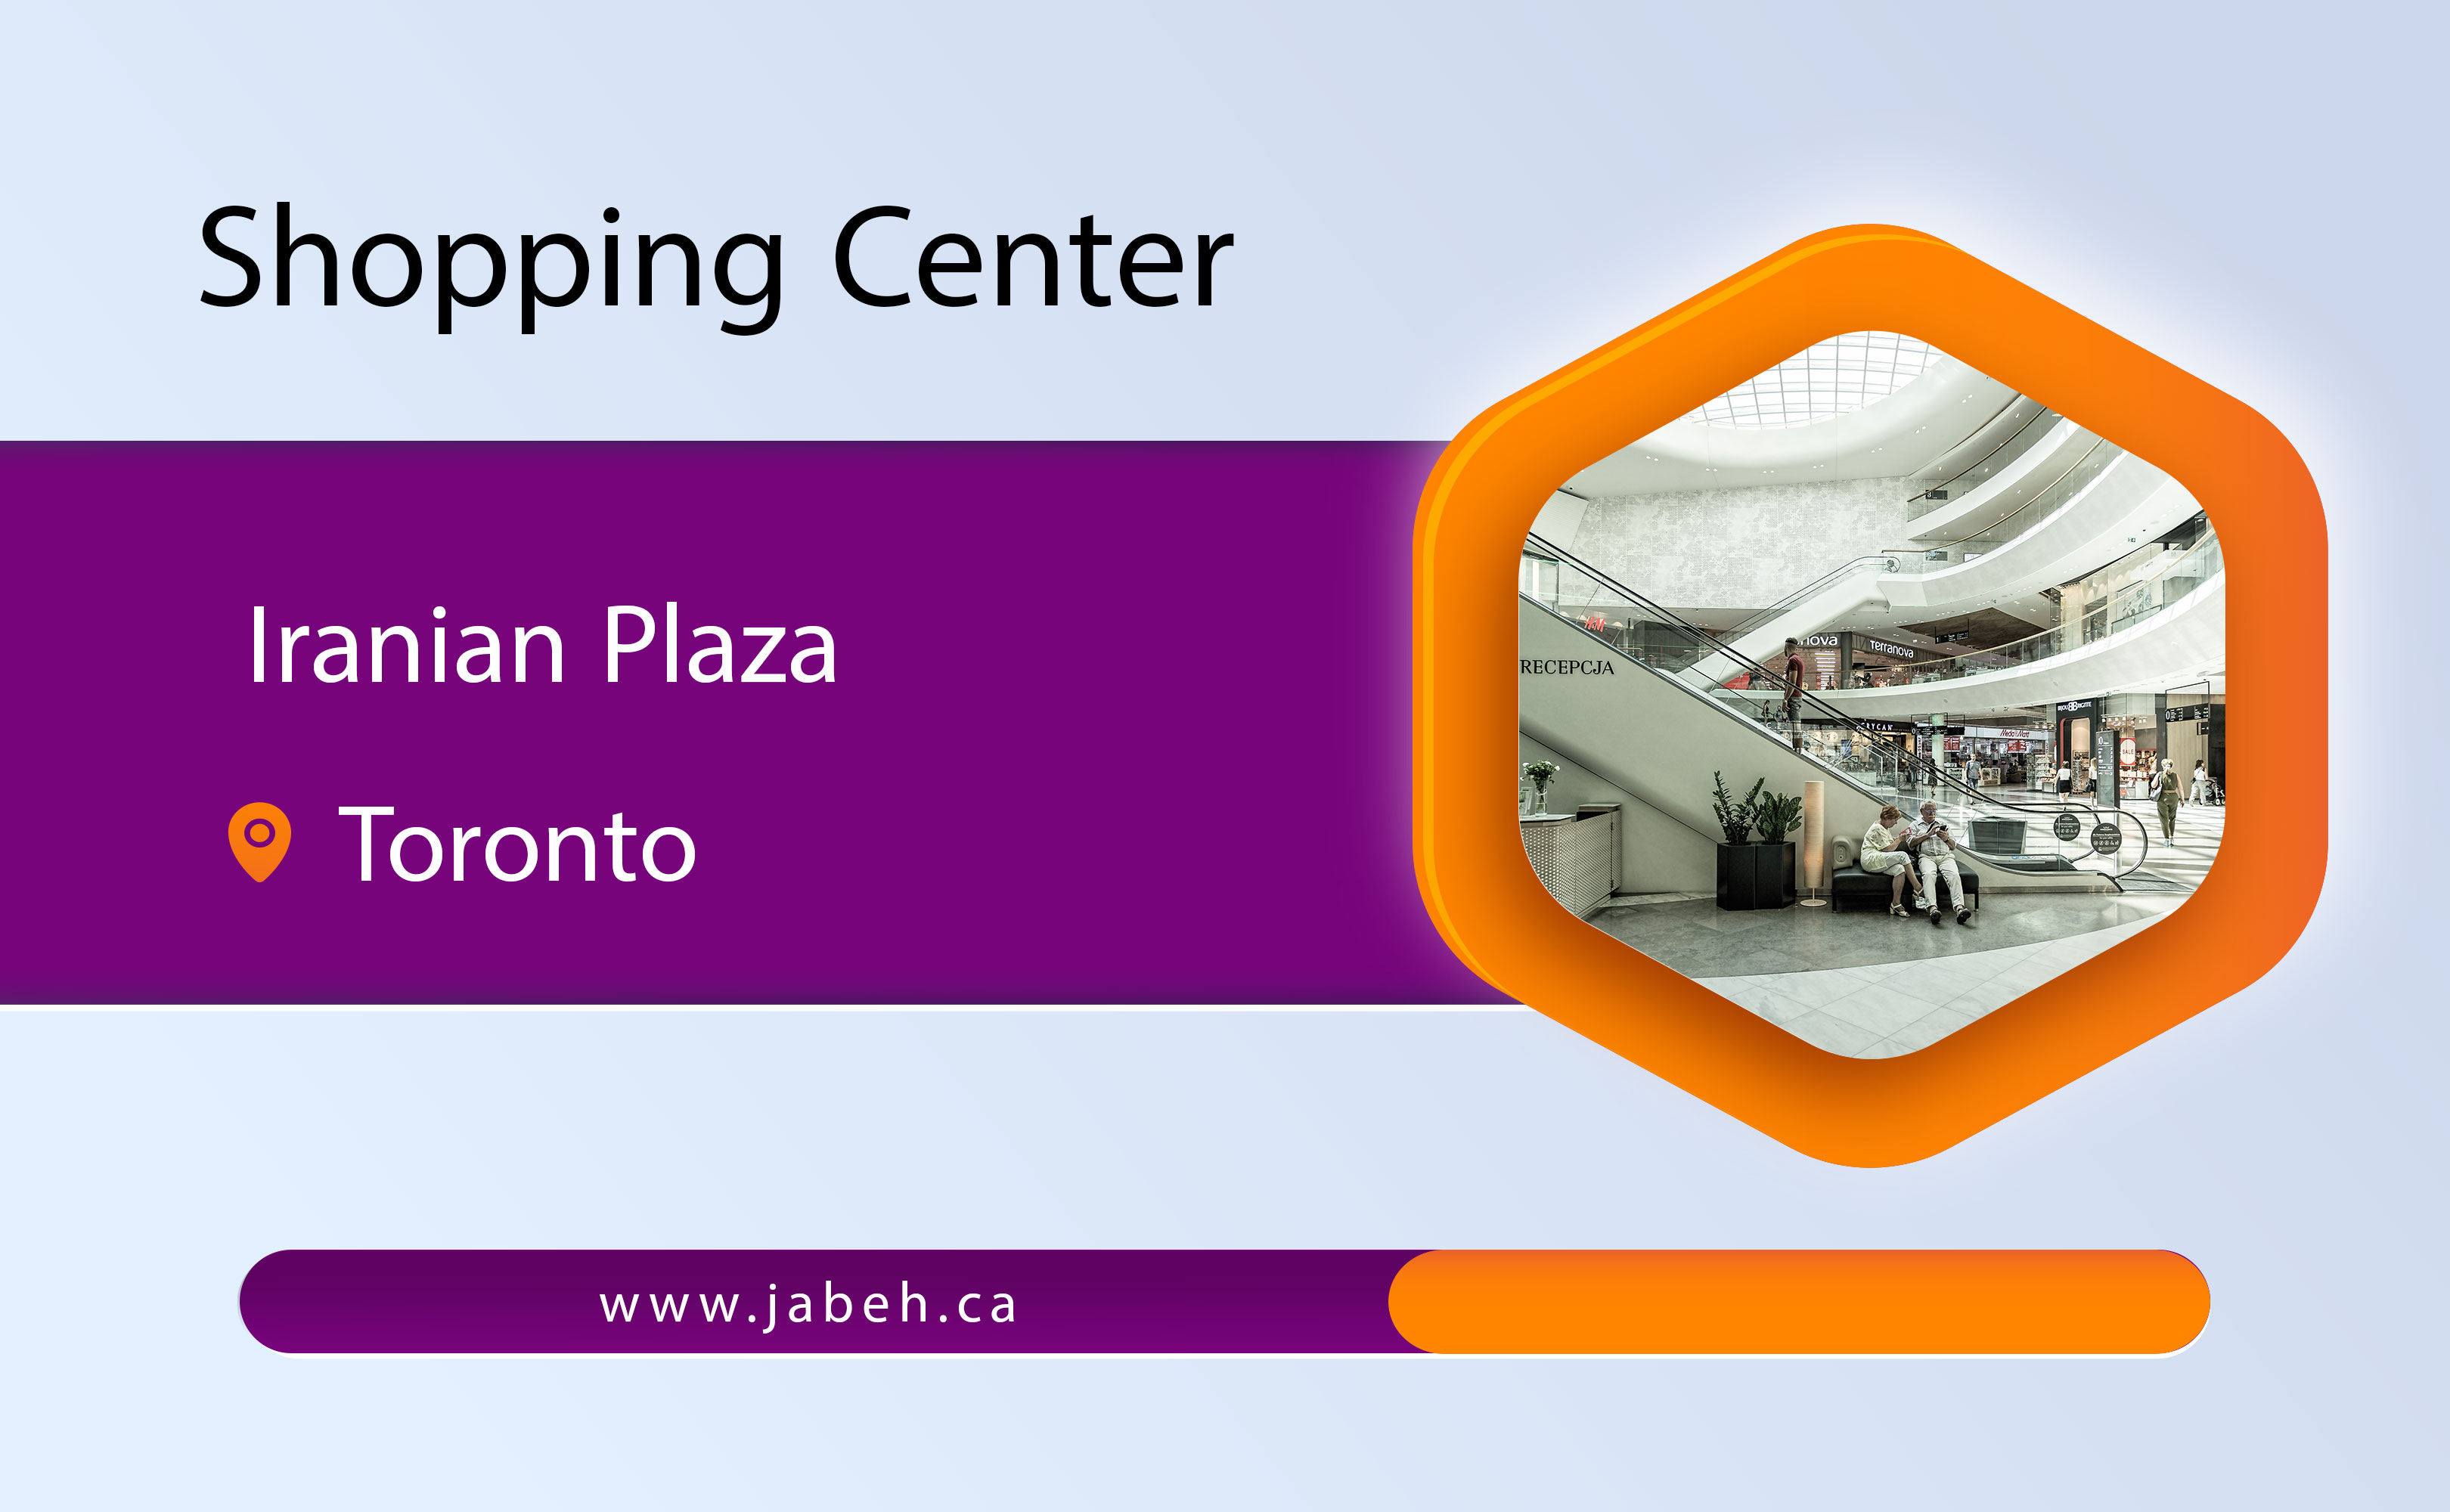 Iranian Plaza shopping center in Toronto